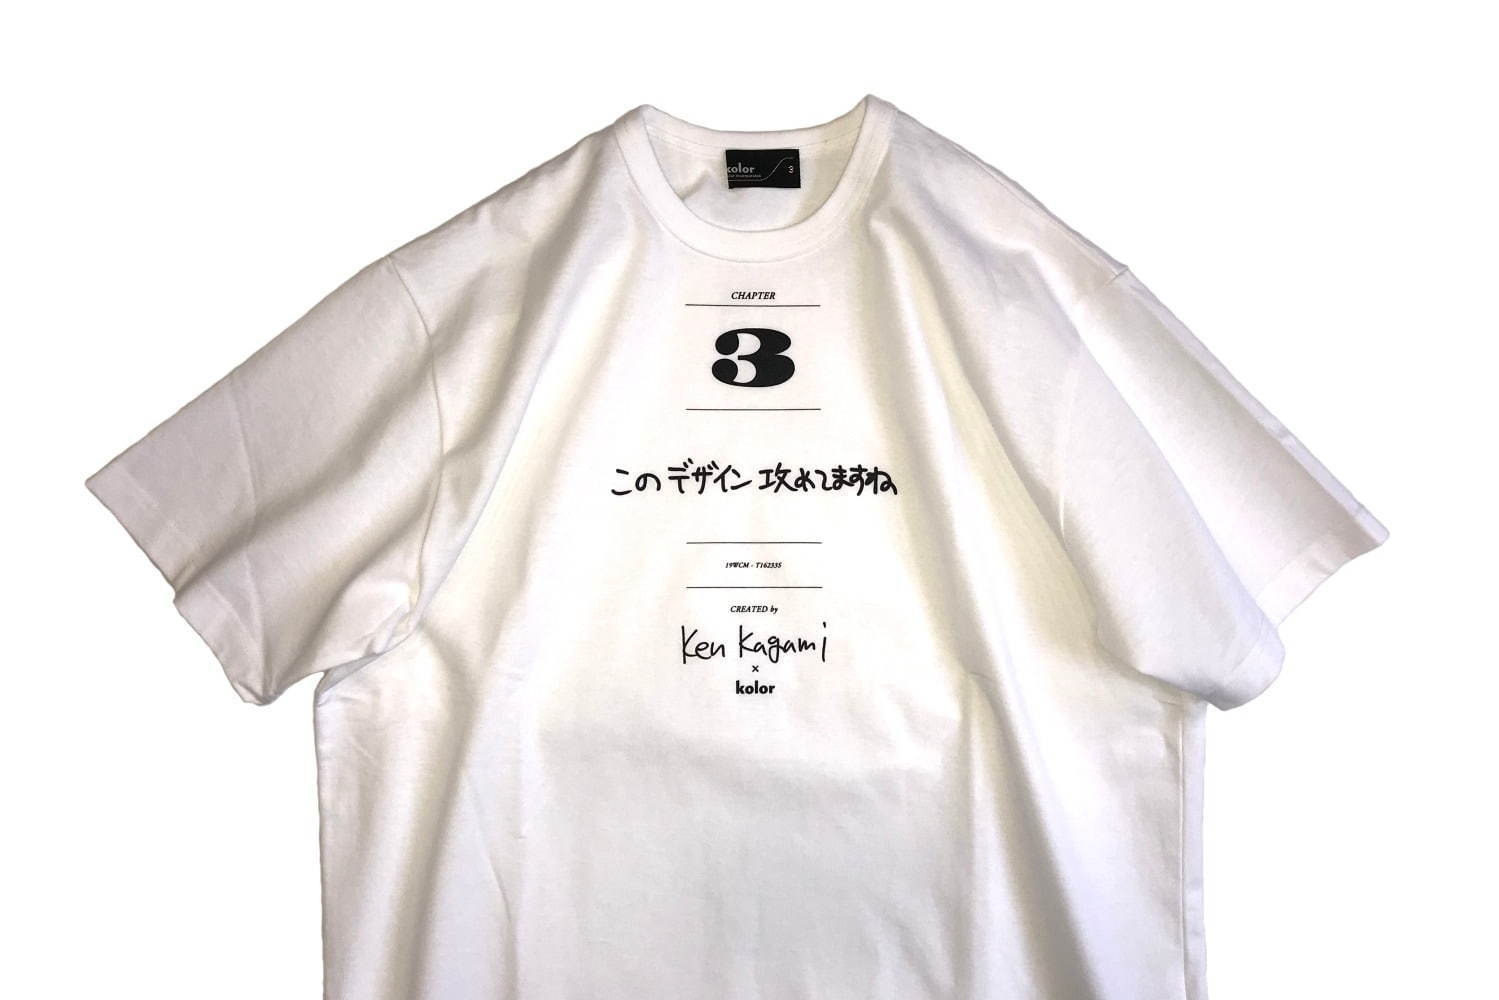 kolor Ken Kagami カラー 加賀美健 コラボ Tシャツ ホワイト